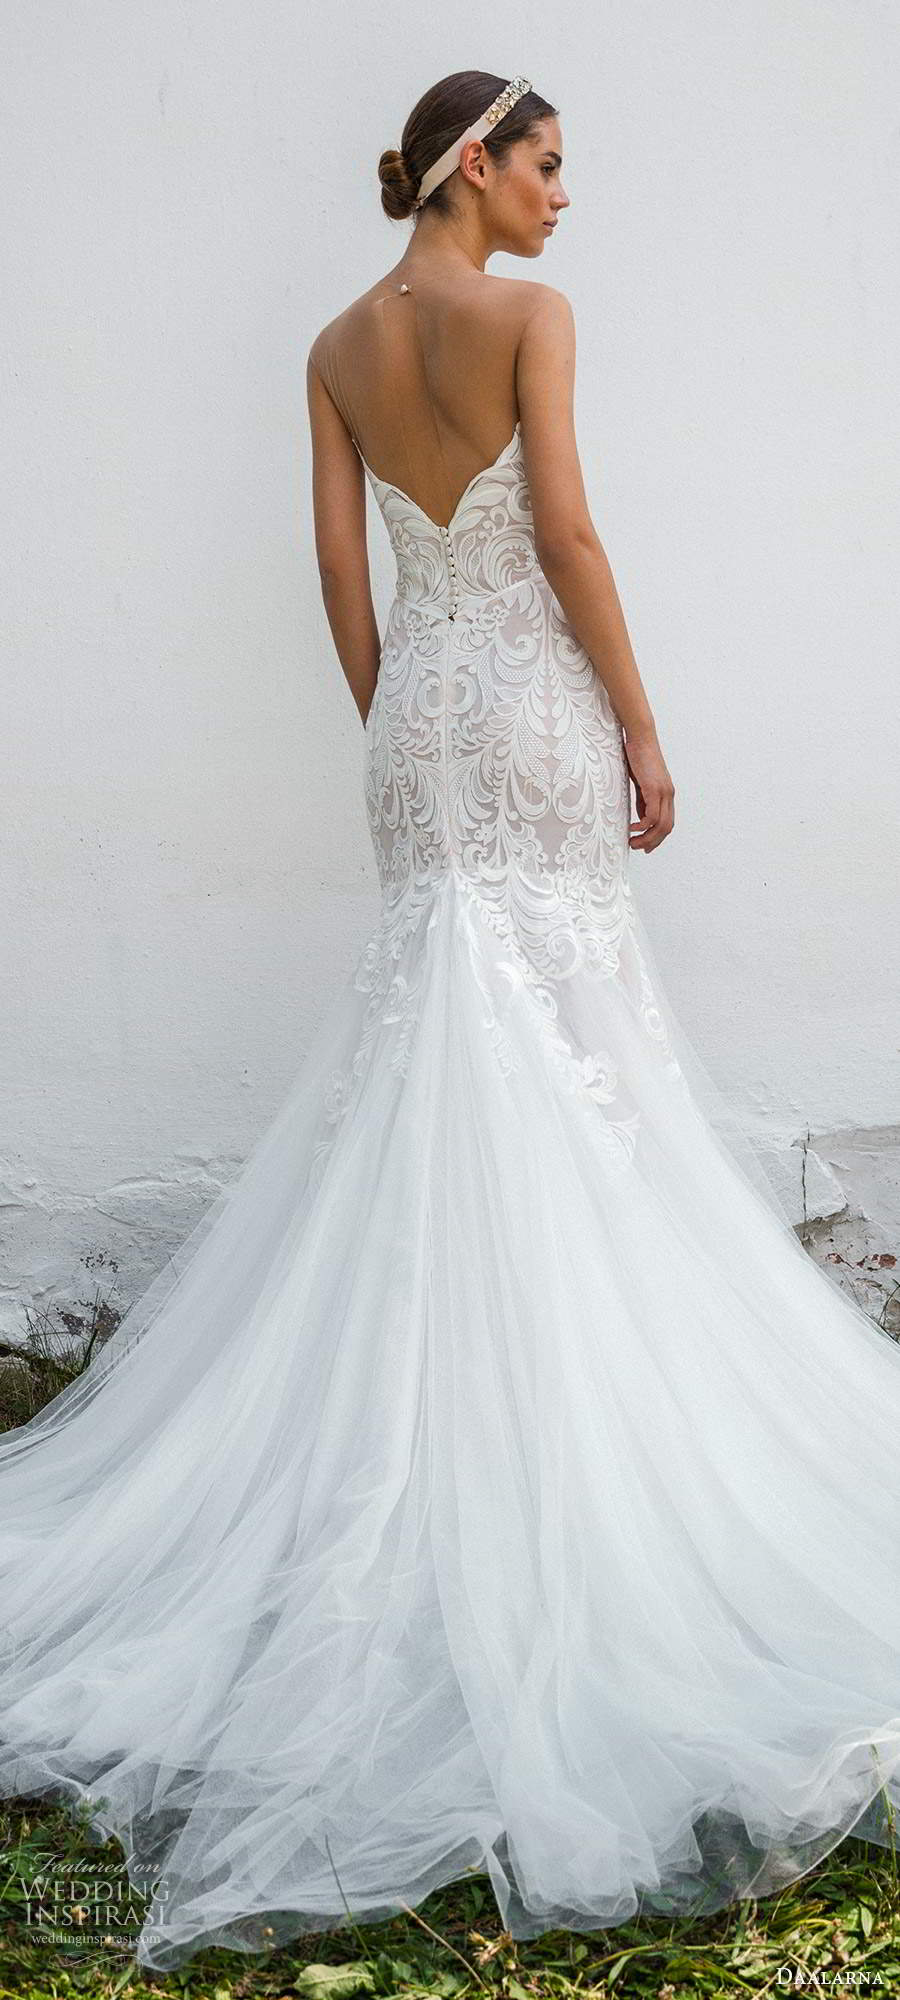 daalarna fall 2020 bridal sleeveless illusion jewel neck plunging v neckline embellished bodice fit flare mermaid wedding dress chapel train (5) bv